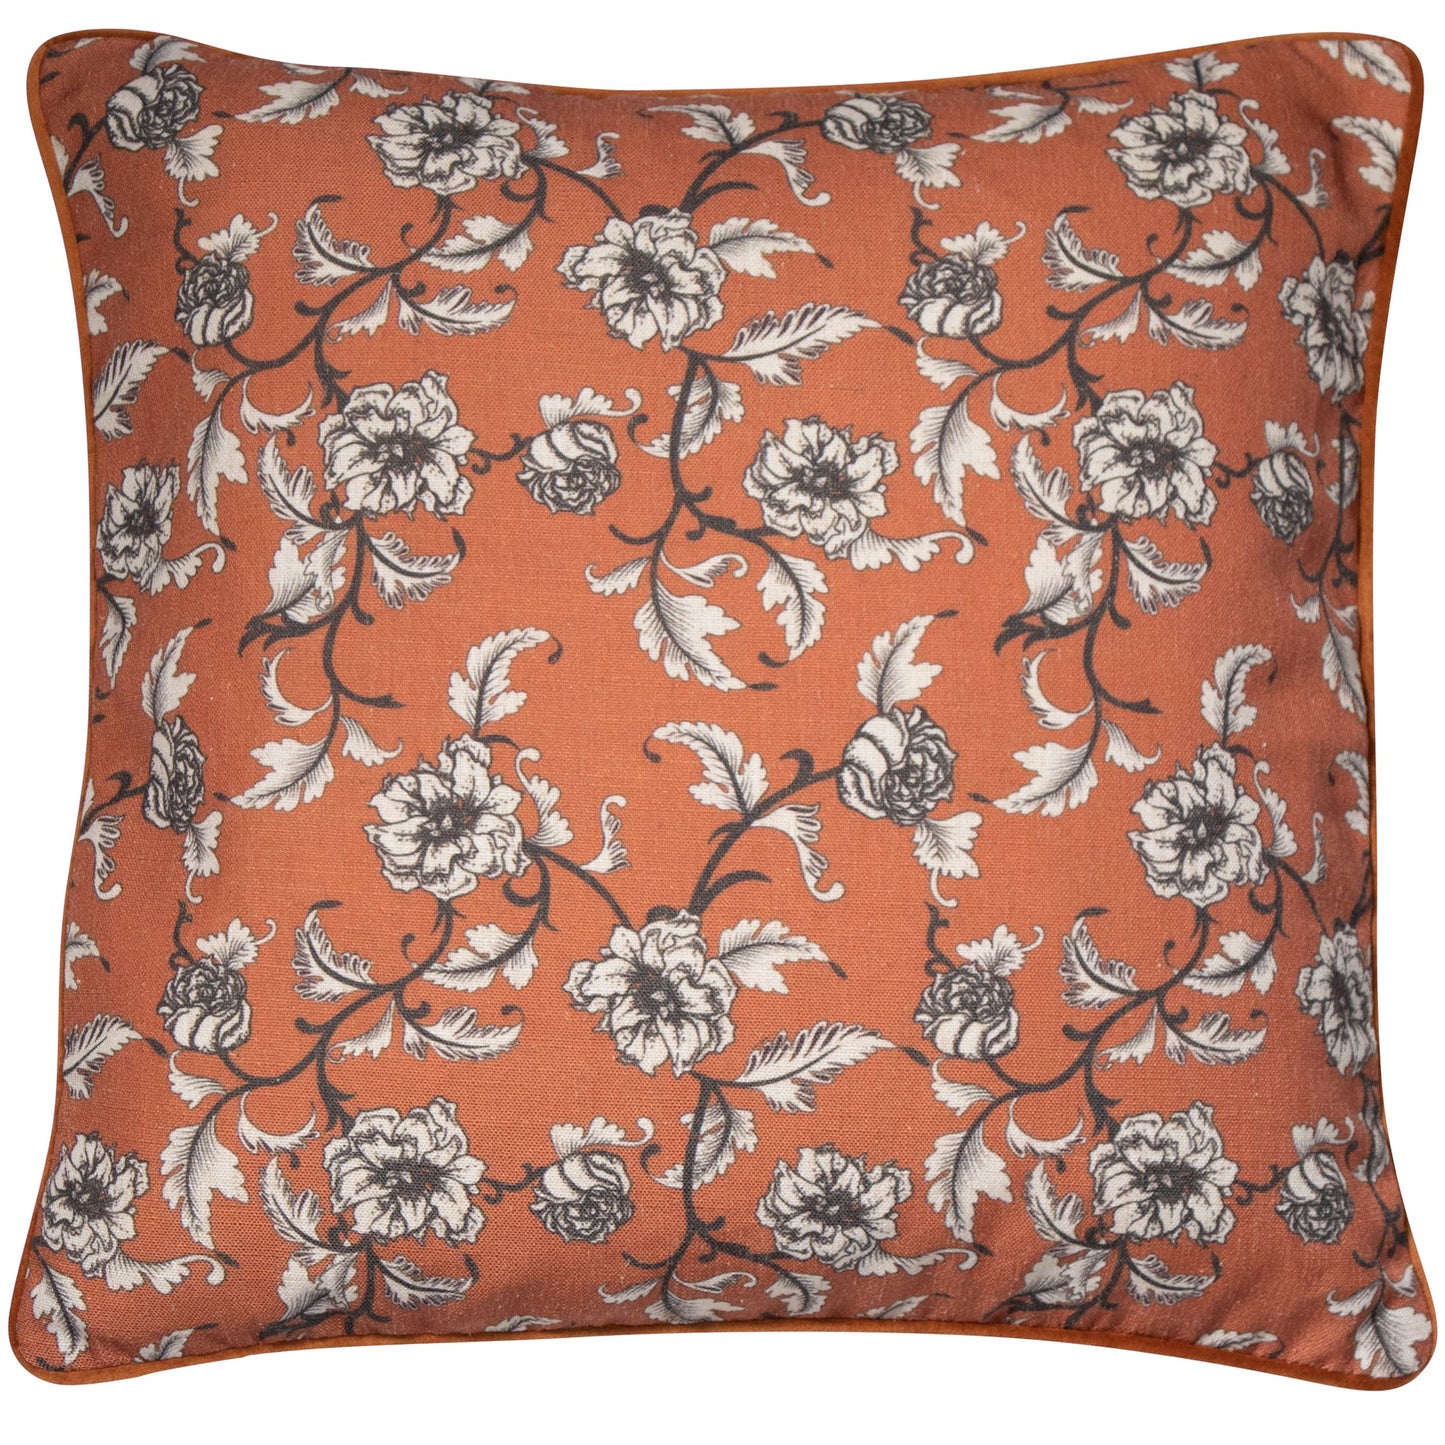 Classic floral printed orange  cushion  45 x 45

Size: 45 x 45 cm